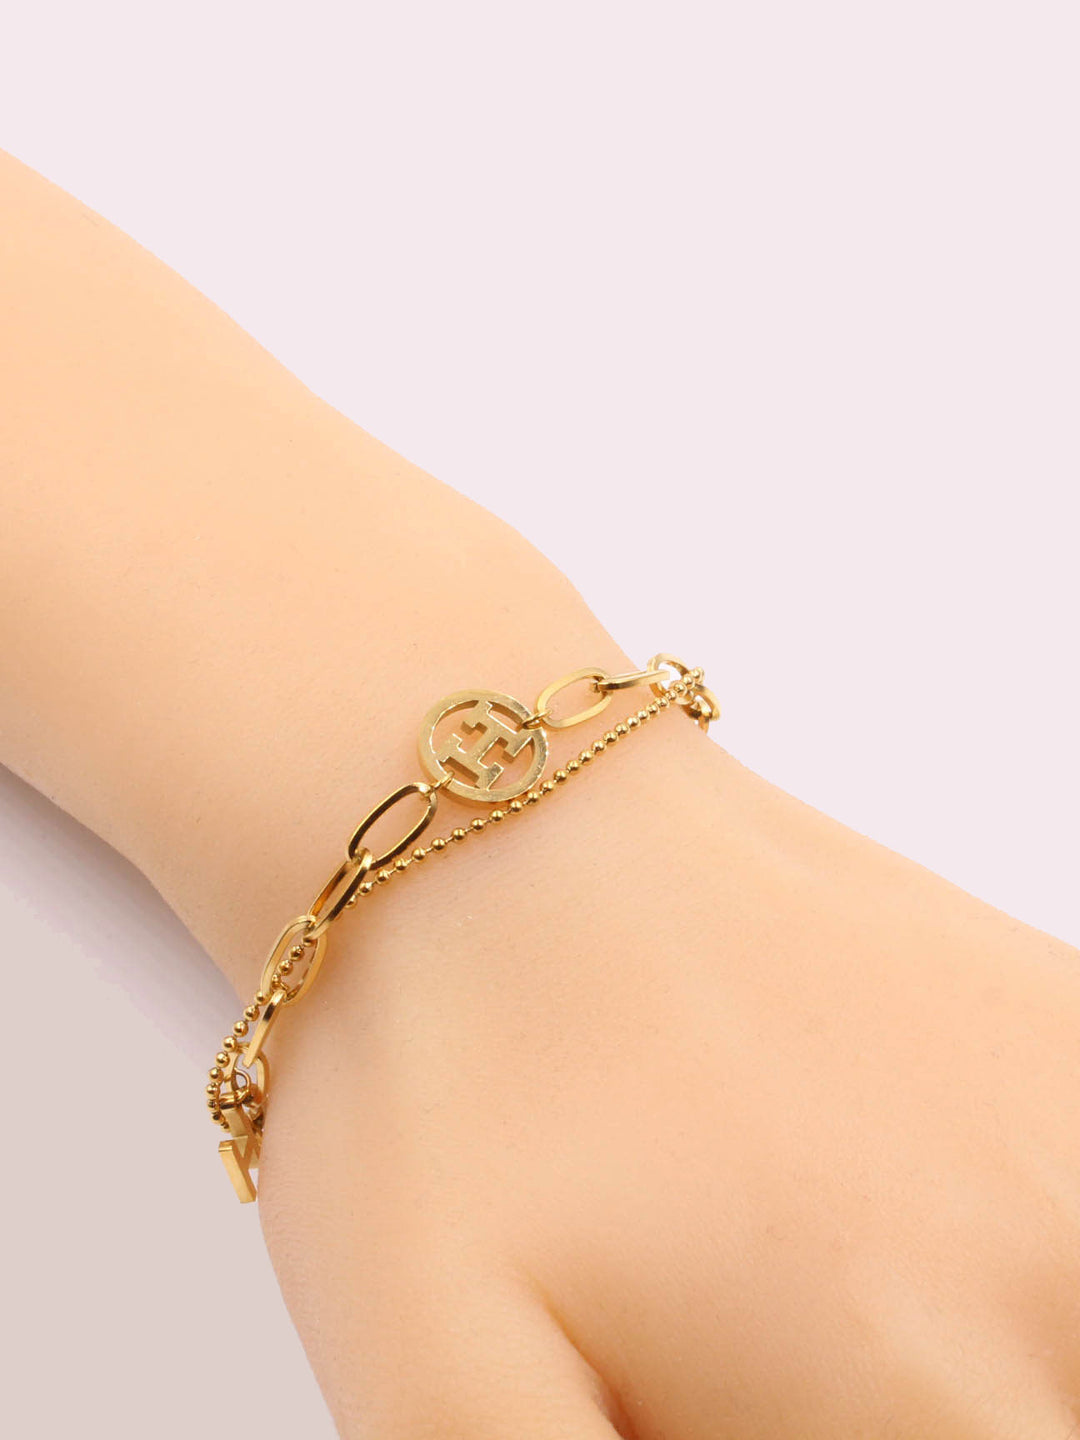 Soft bracelet of Hormuz - أسوارة هرمز ناعمة  - Jewel